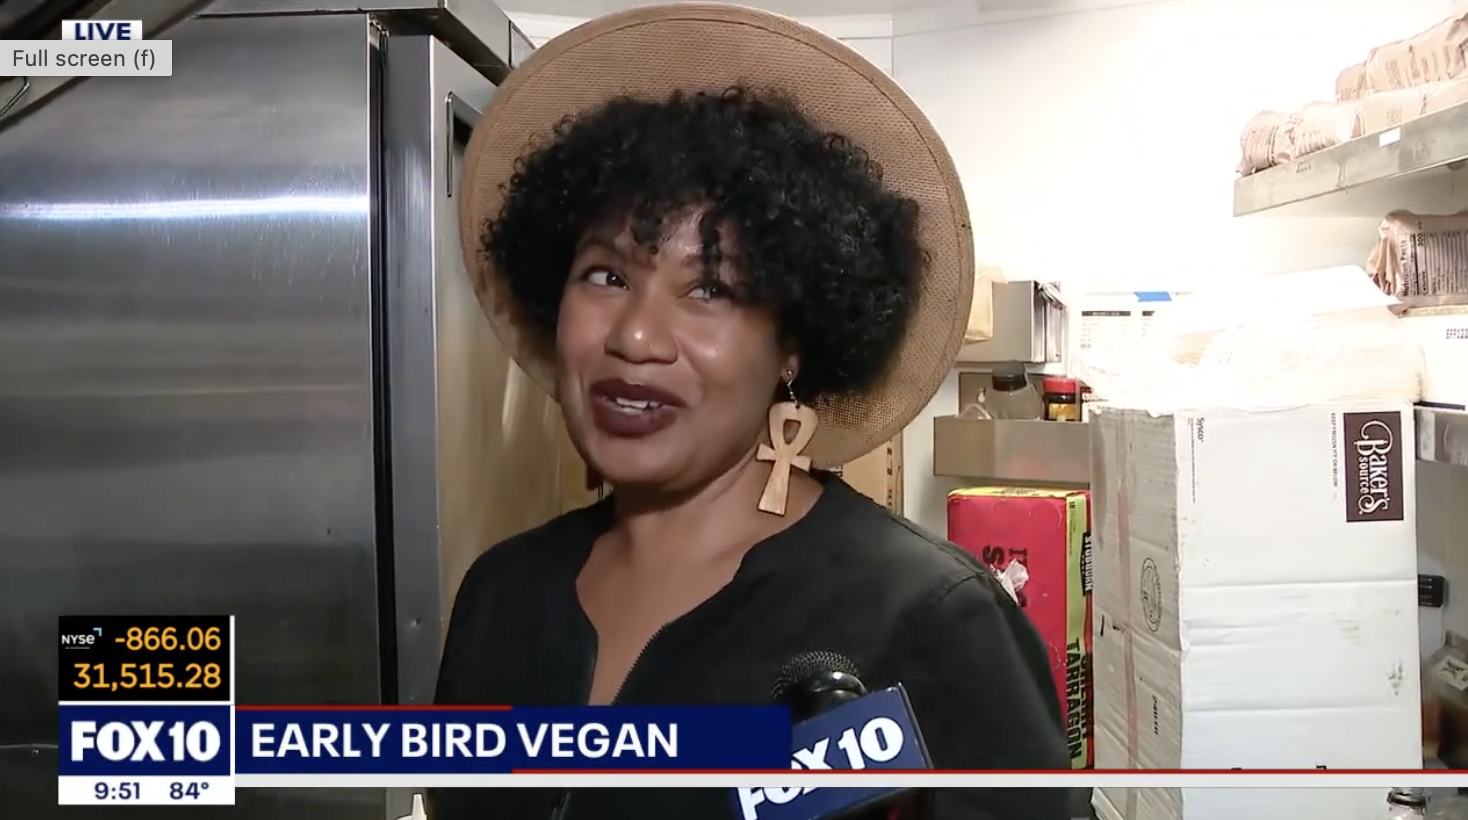 SMBX Issuer Early Bird Vegan Featured on Arizona Fox 10's 